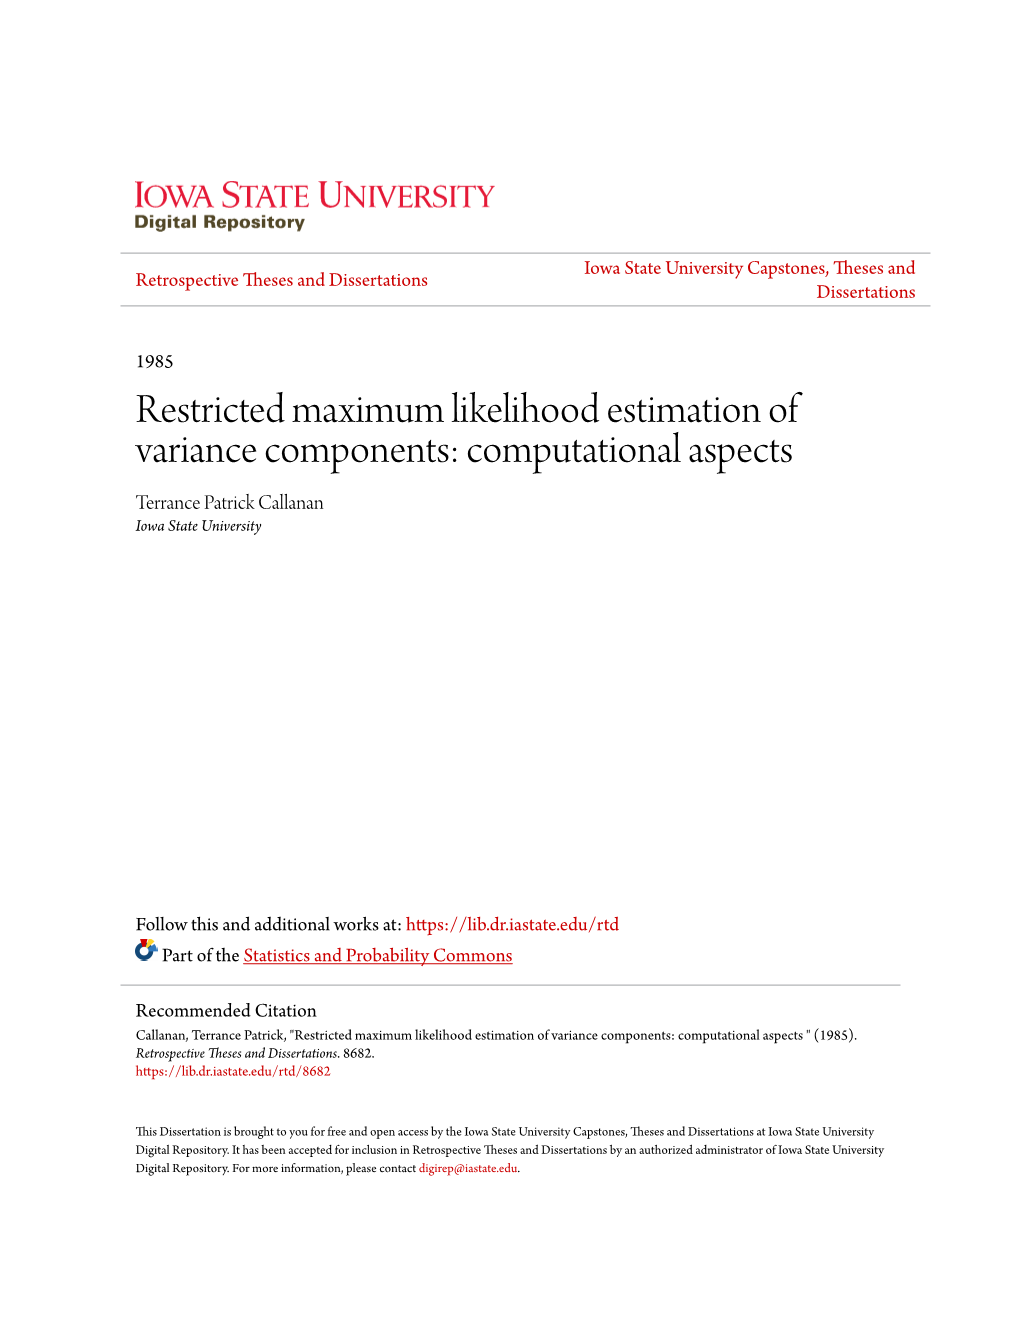 Restricted Maximum Likelihood Estimation of Variance Components: Computational Aspects Terrance Patrick Callanan Iowa State University